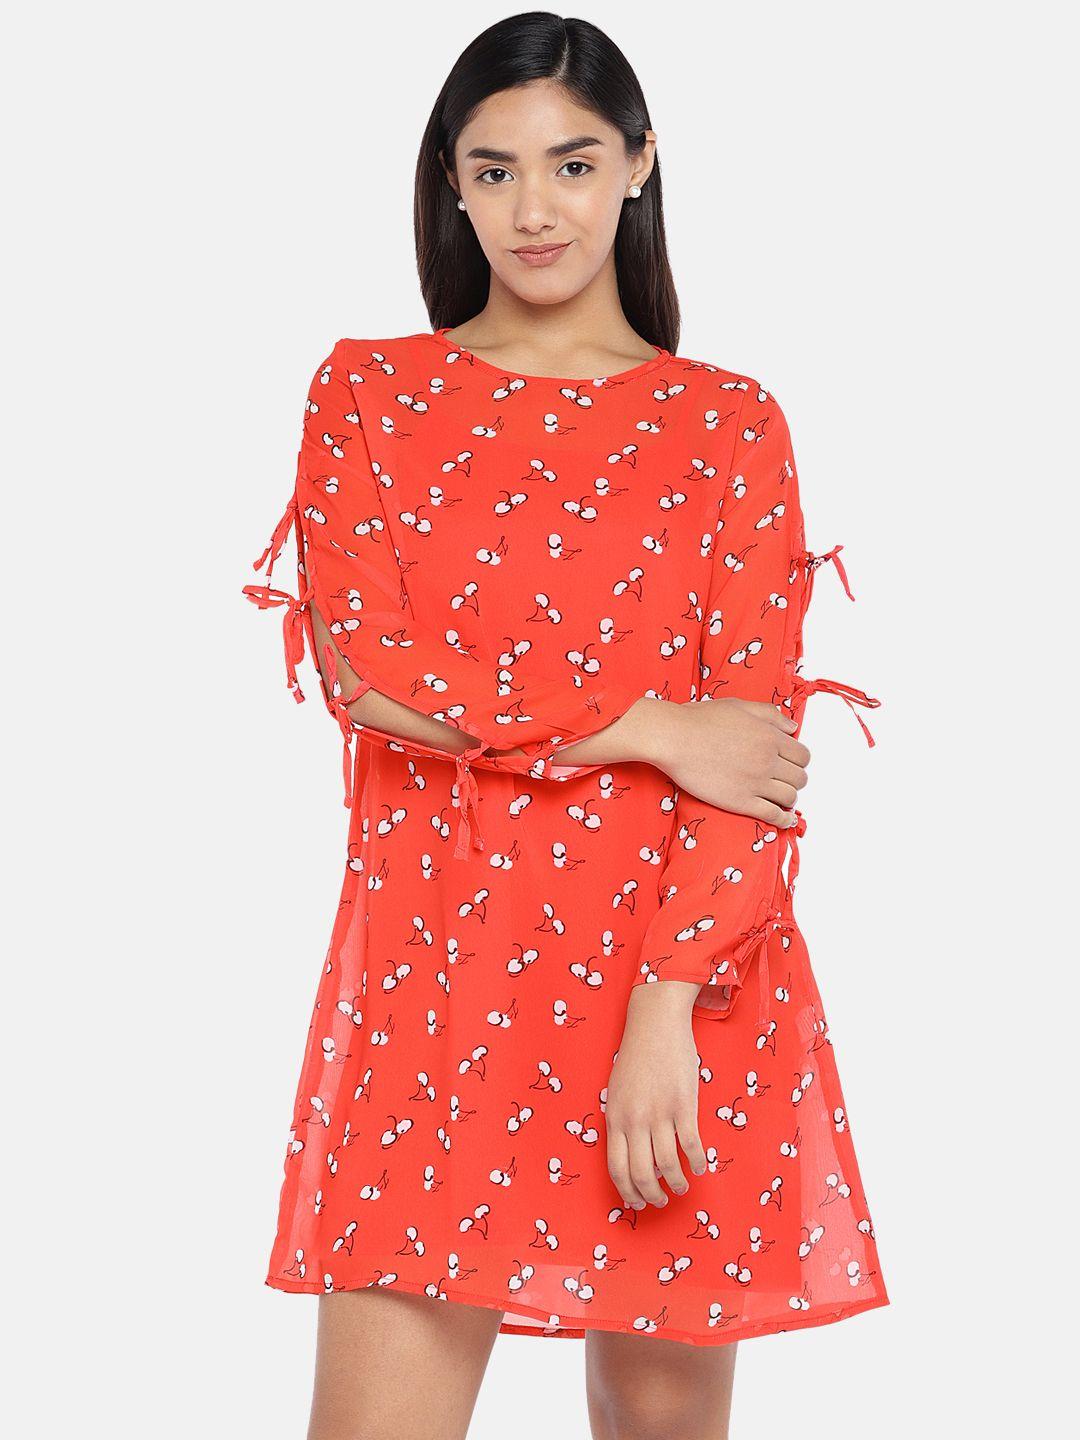 globus-women-red-printed-a-line-dress